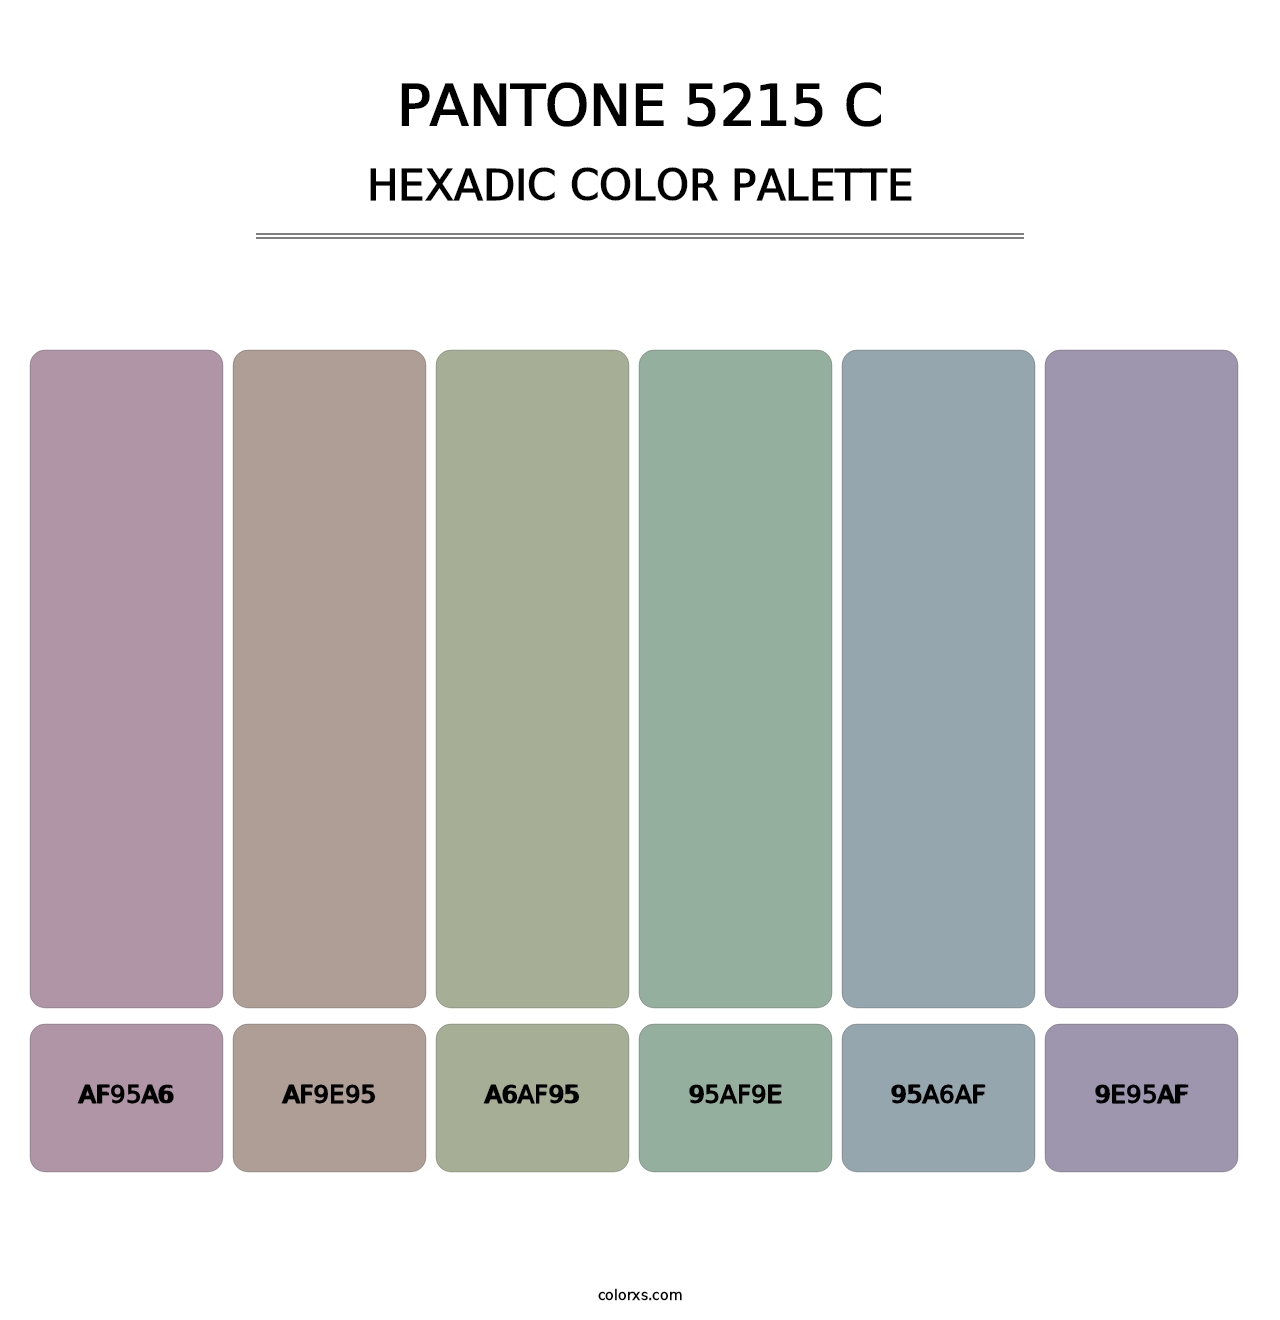 PANTONE 5215 C - Hexadic Color Palette